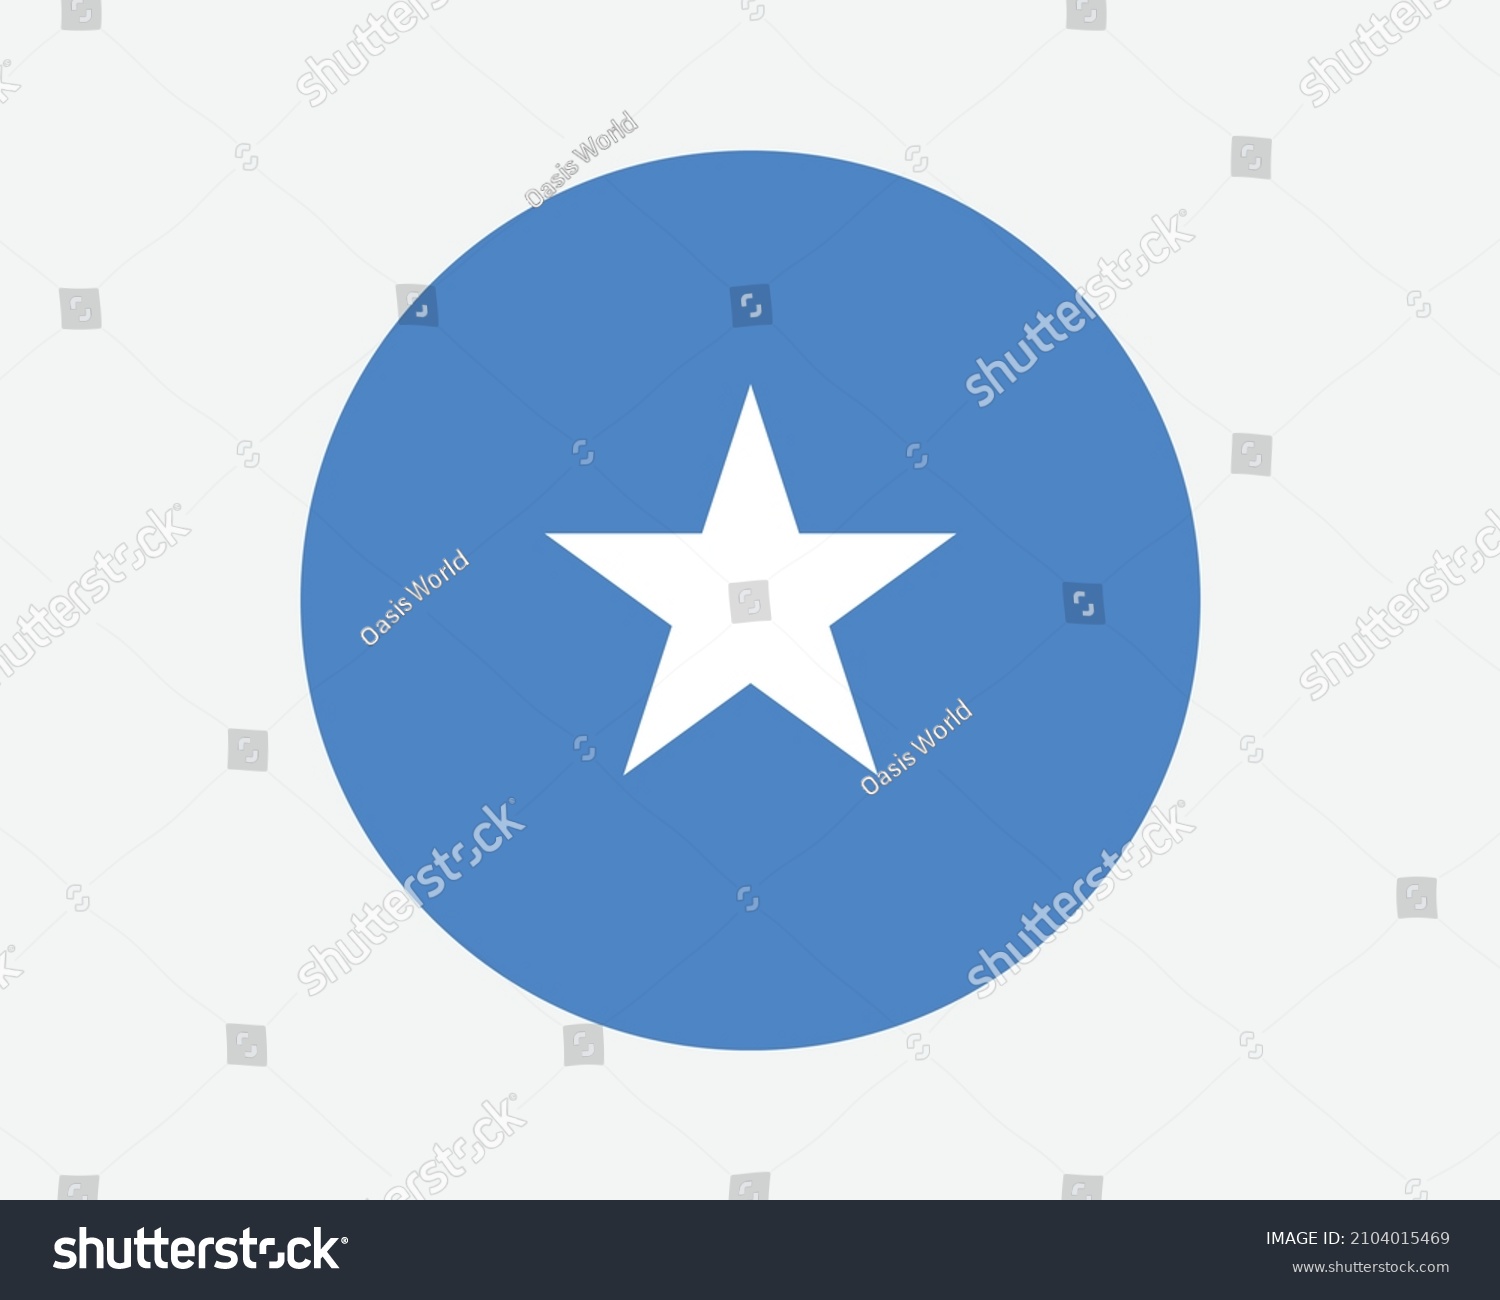 SVG of Somalia Round Country Flag. Somalia Circle National Flag. Federal Republic of Somalia Circular Shape Button Banner. EPS Vector Illustration. svg